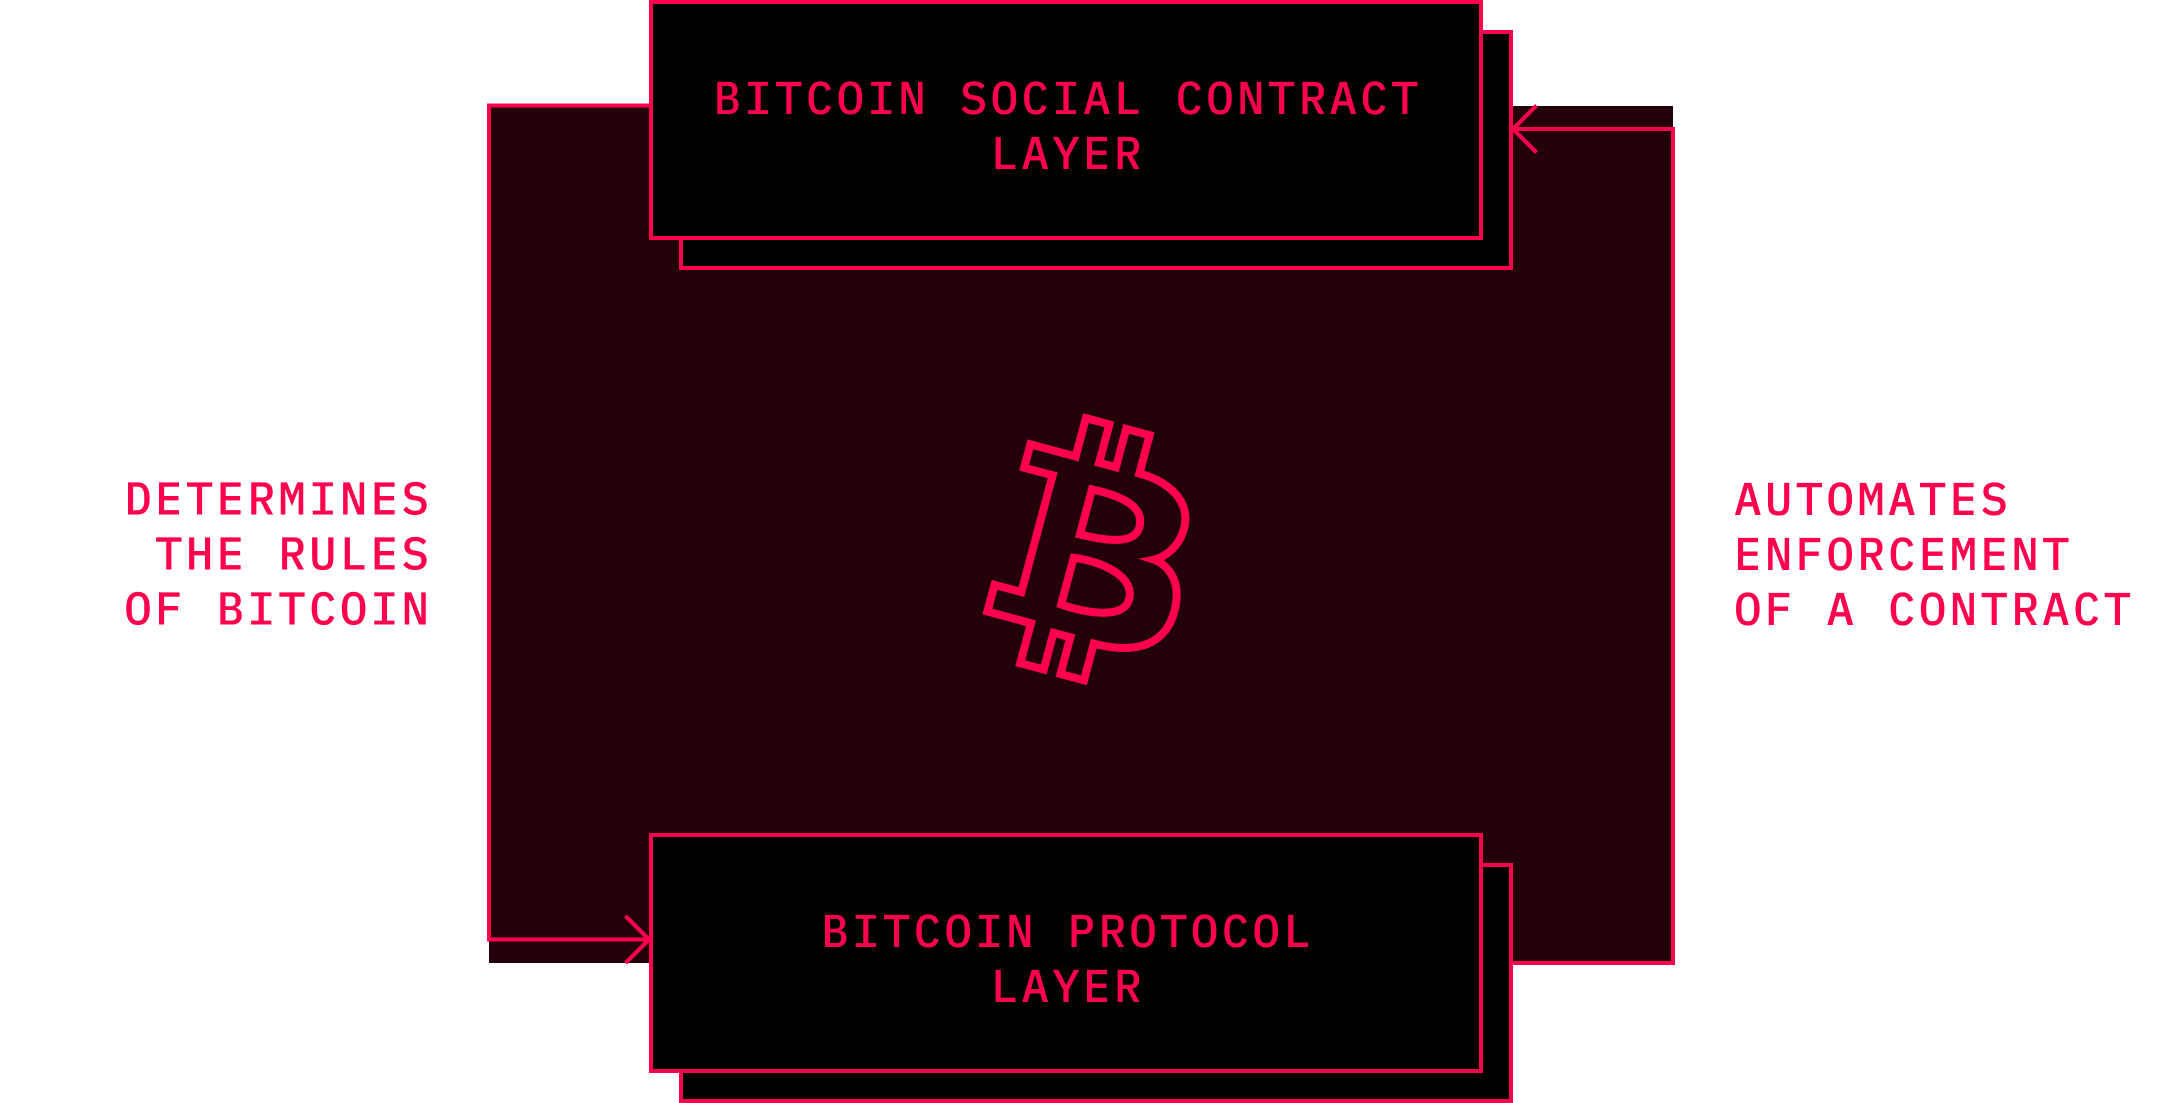 Hasu’s model of the social contract in Bitcoin